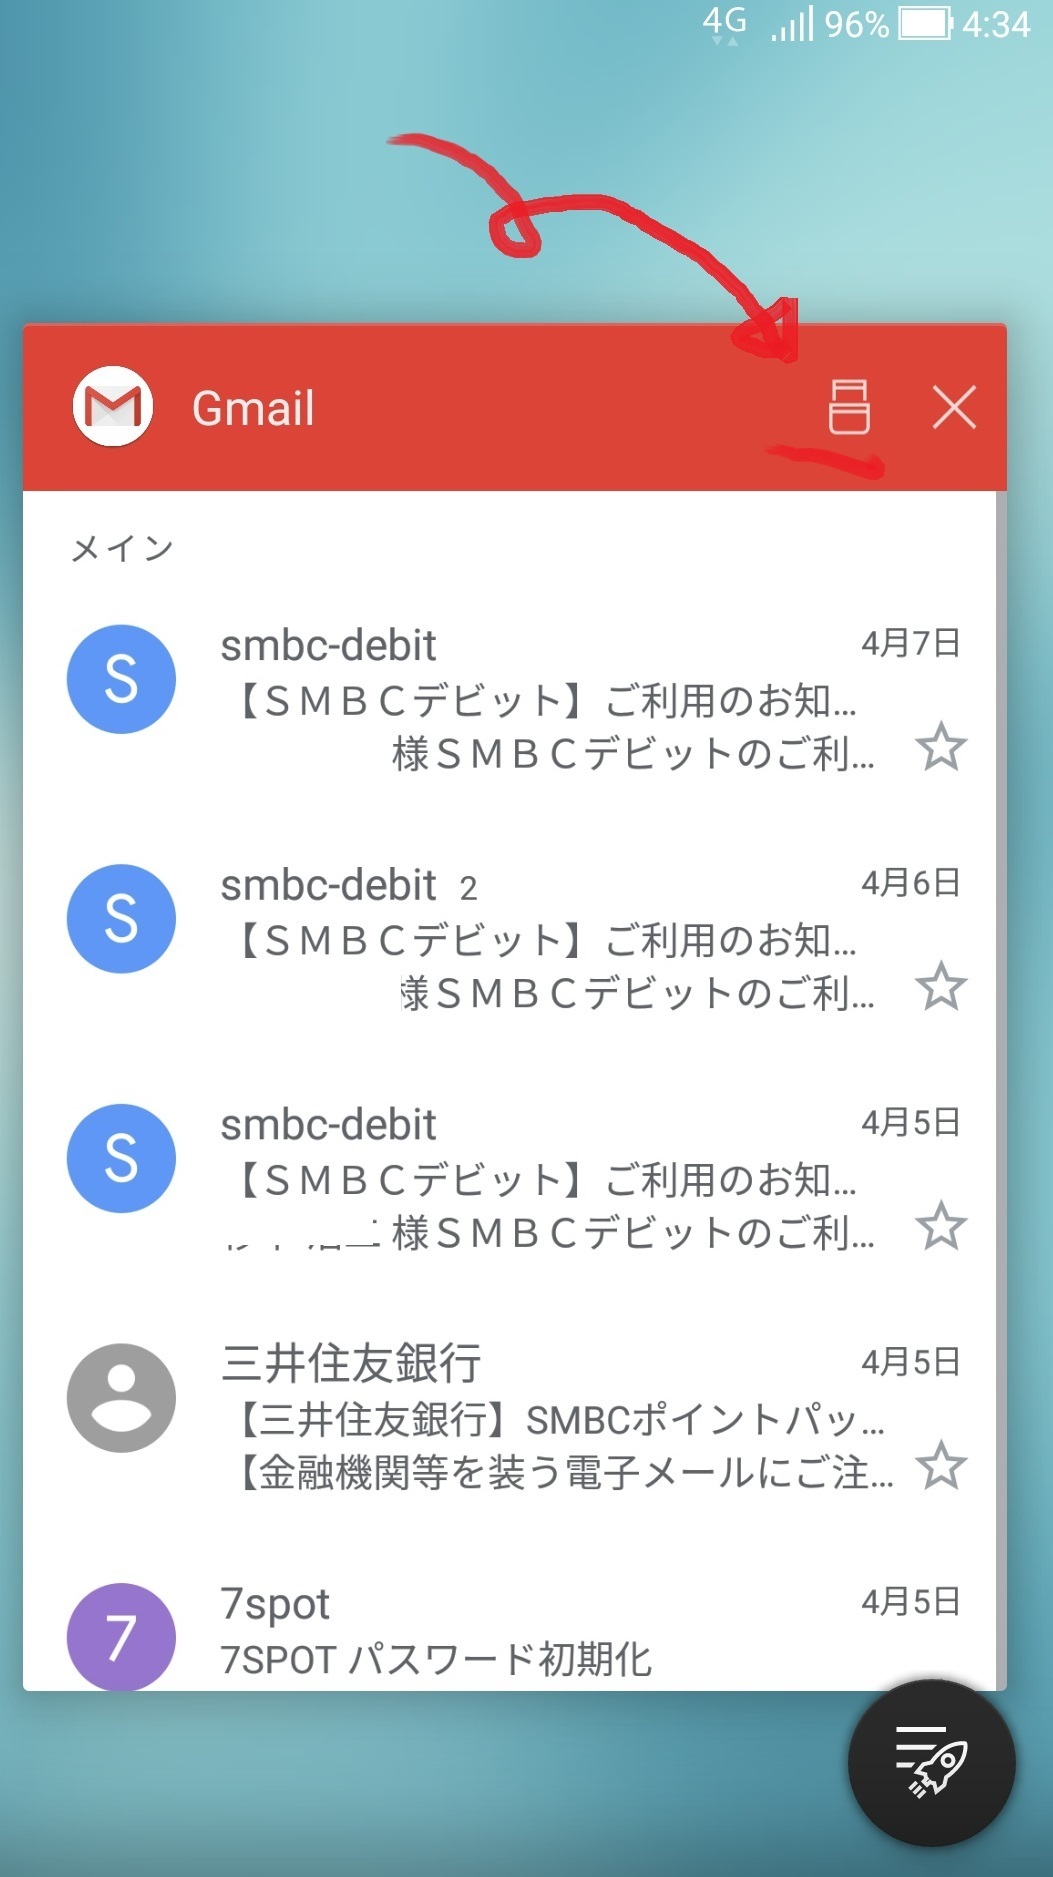 sumaho_2gamen_settei_.jpg